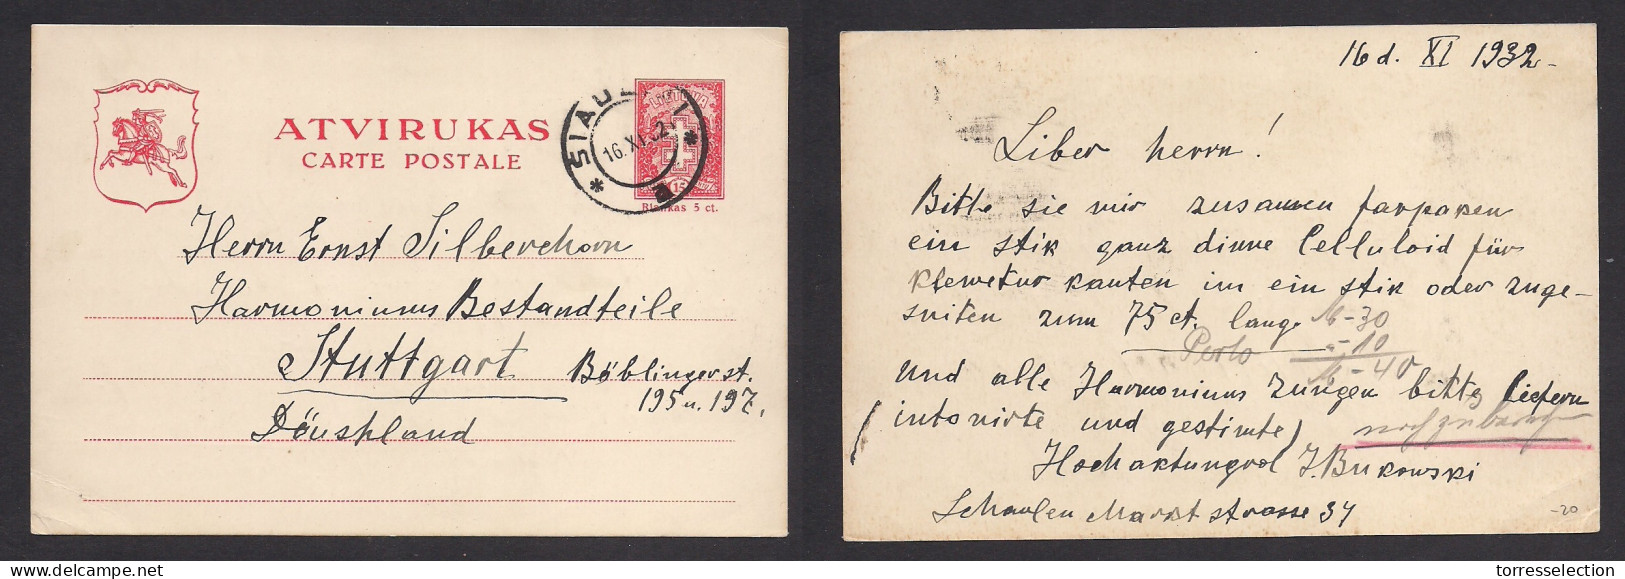 LITHUANIA. 1932 (16 Nov) SIAULIAI - Stuttgart, Germany. 5c Red Stat Card. Fine Used. XSALE. - Lituania